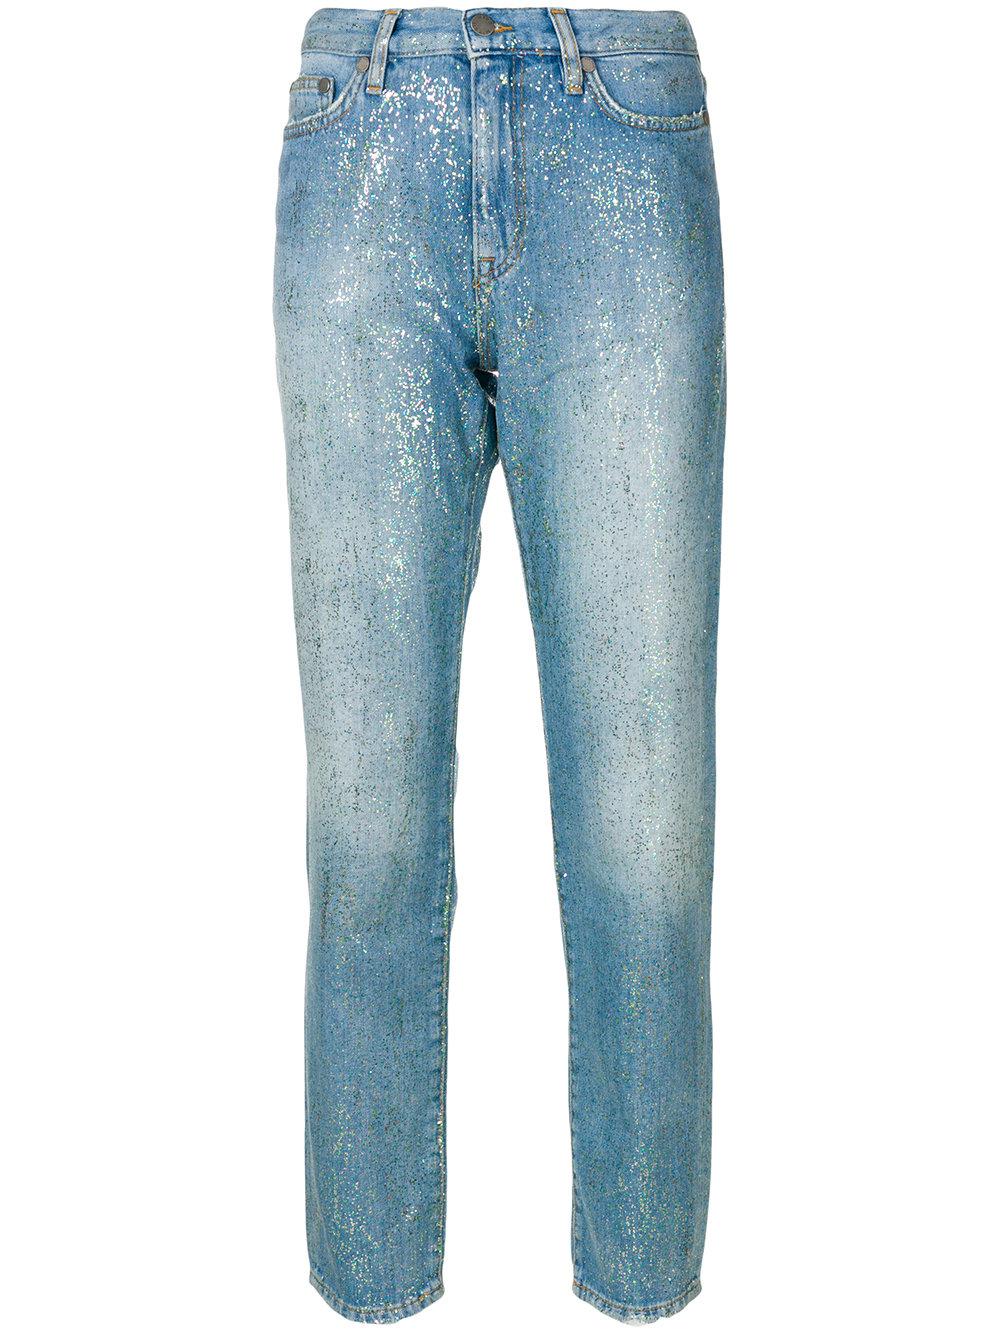 Mira Mikati Multi Glitter Denim Jeans in Blue | Lyst